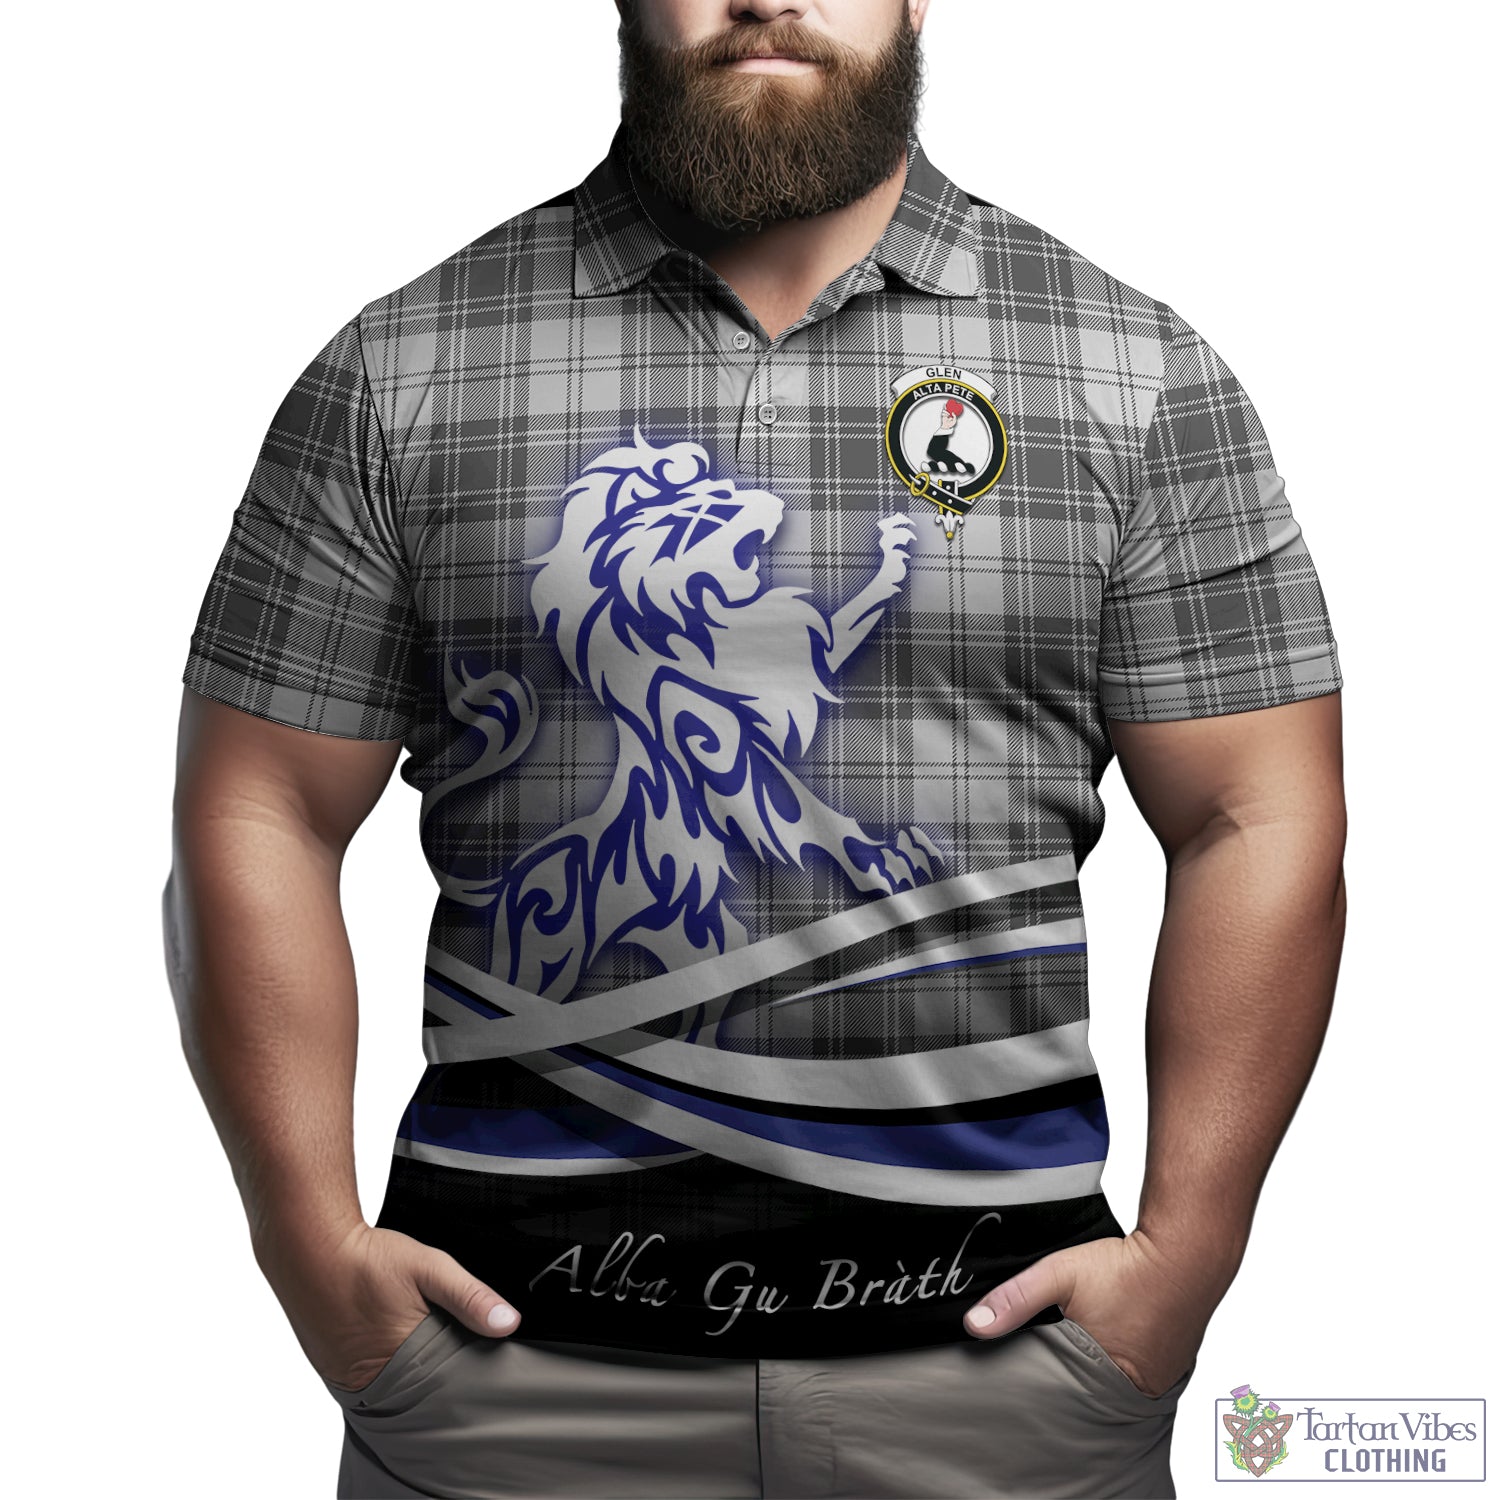 glen-tartan-polo-shirt-with-alba-gu-brath-regal-lion-emblem